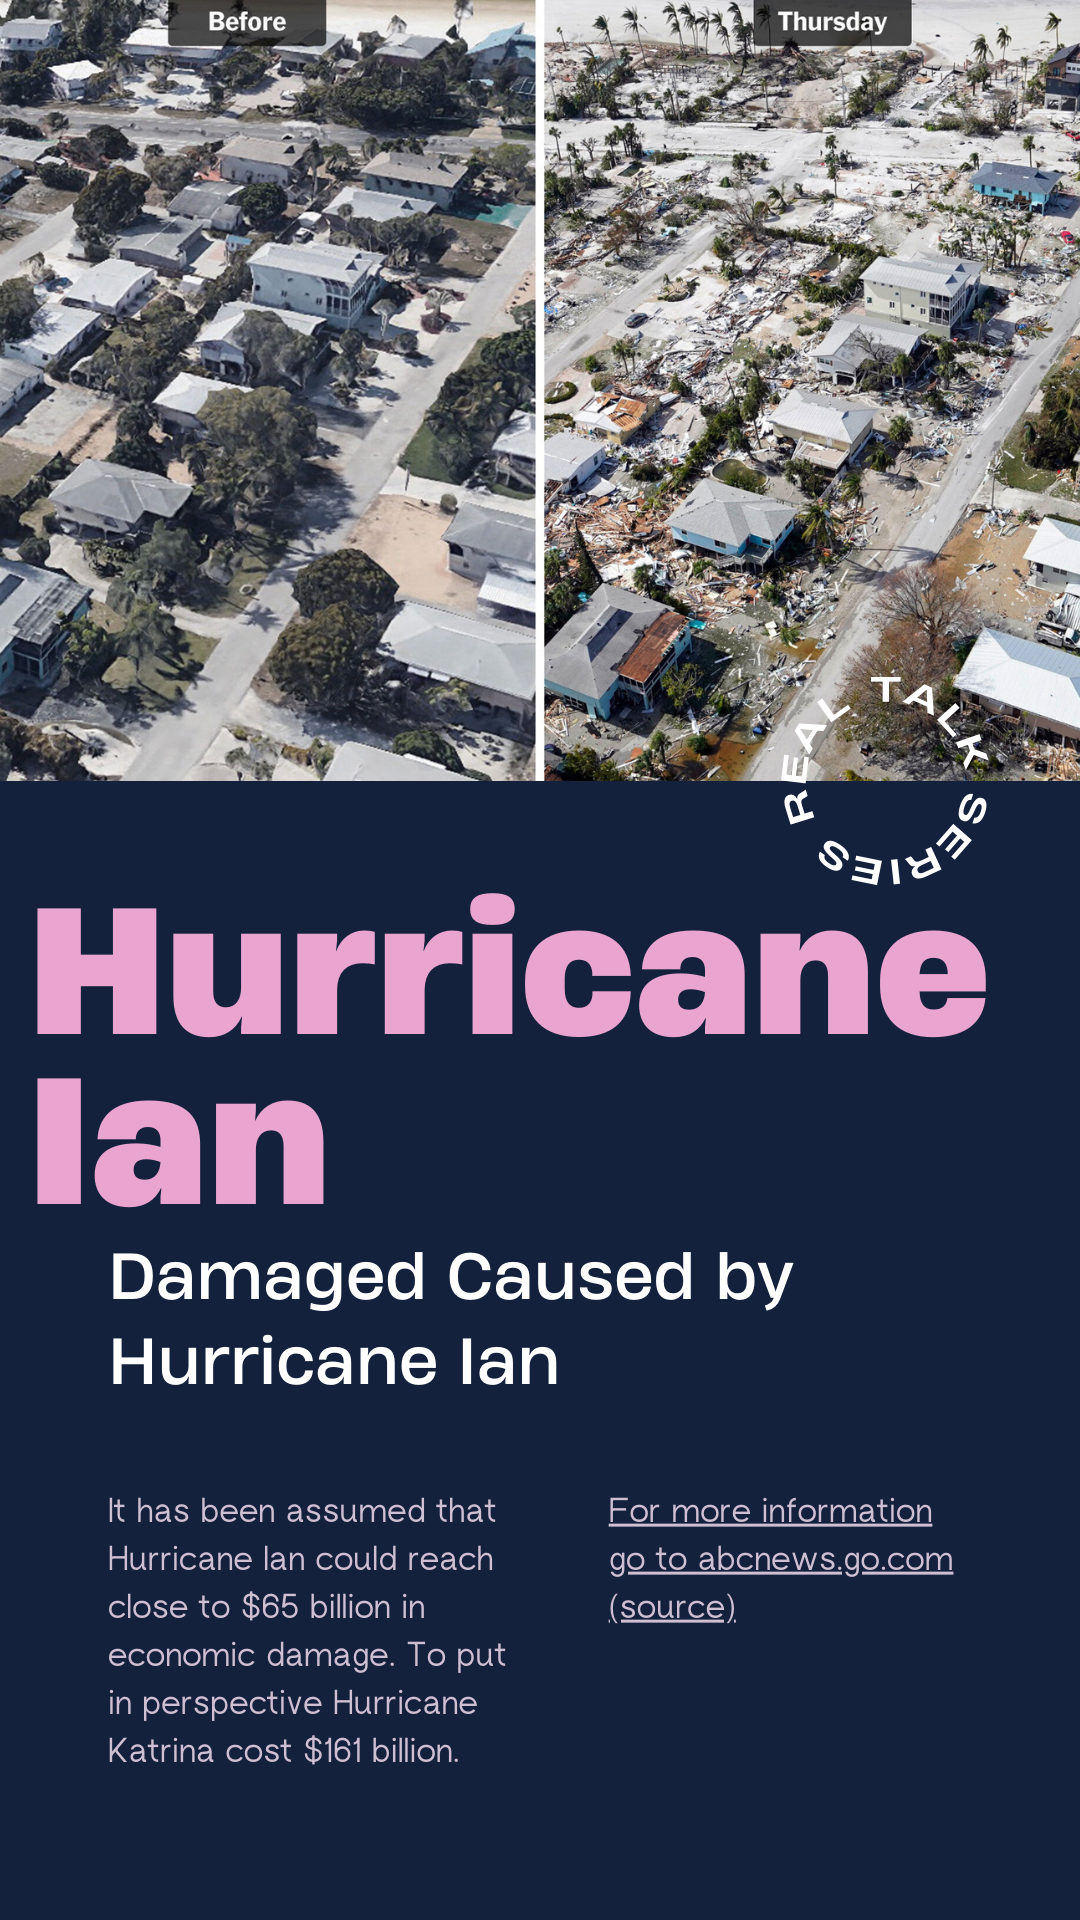 Info on Hurricanes & Hurricane Ian (Student Showcase)